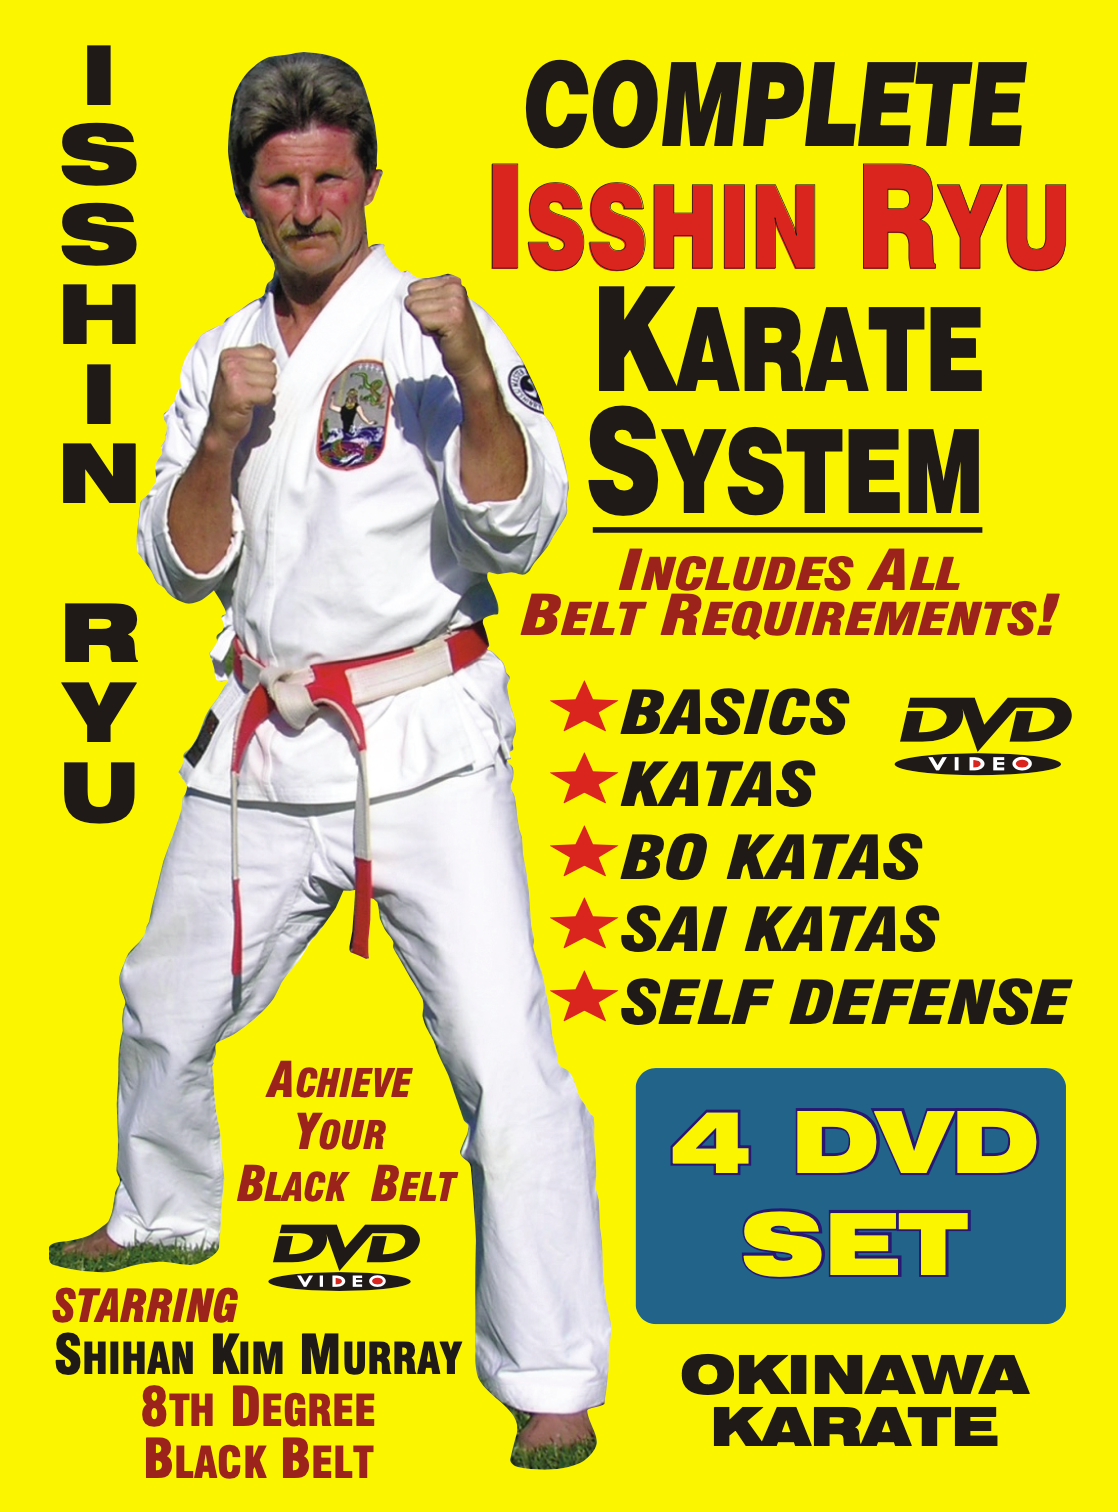 Complete Okinawa Isshin Ryu Karate System 4 DVD Set by Kim Murray